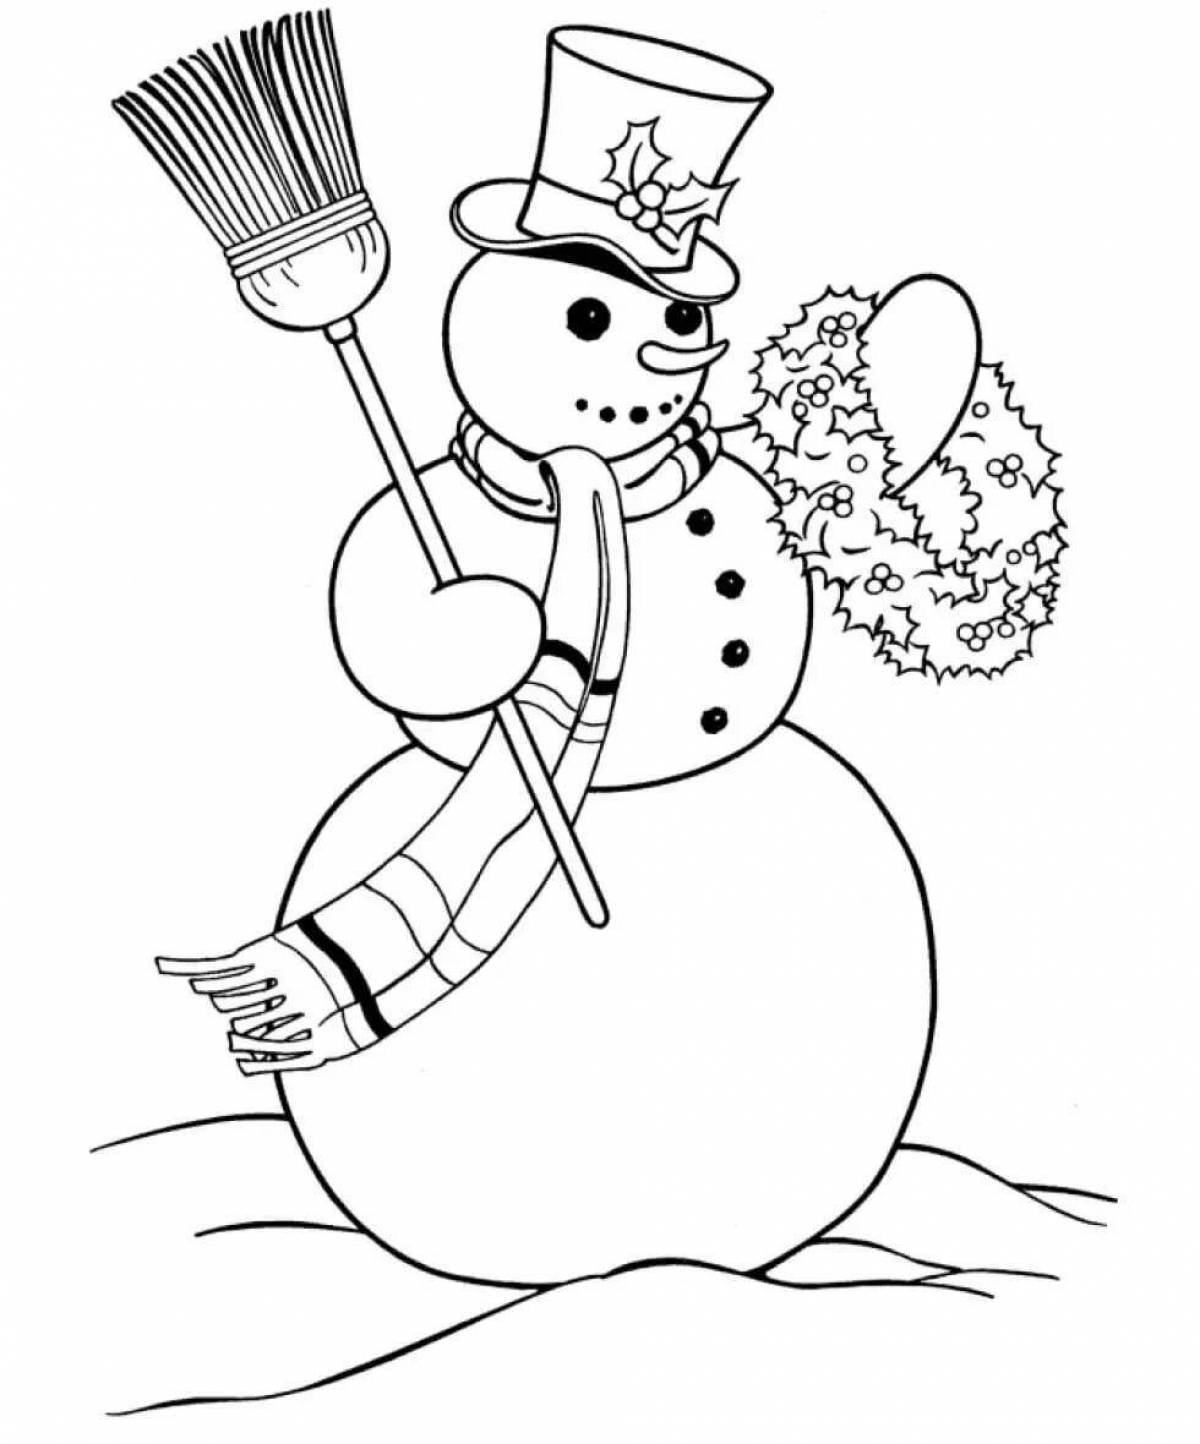 Coloring page happy birthday snowman